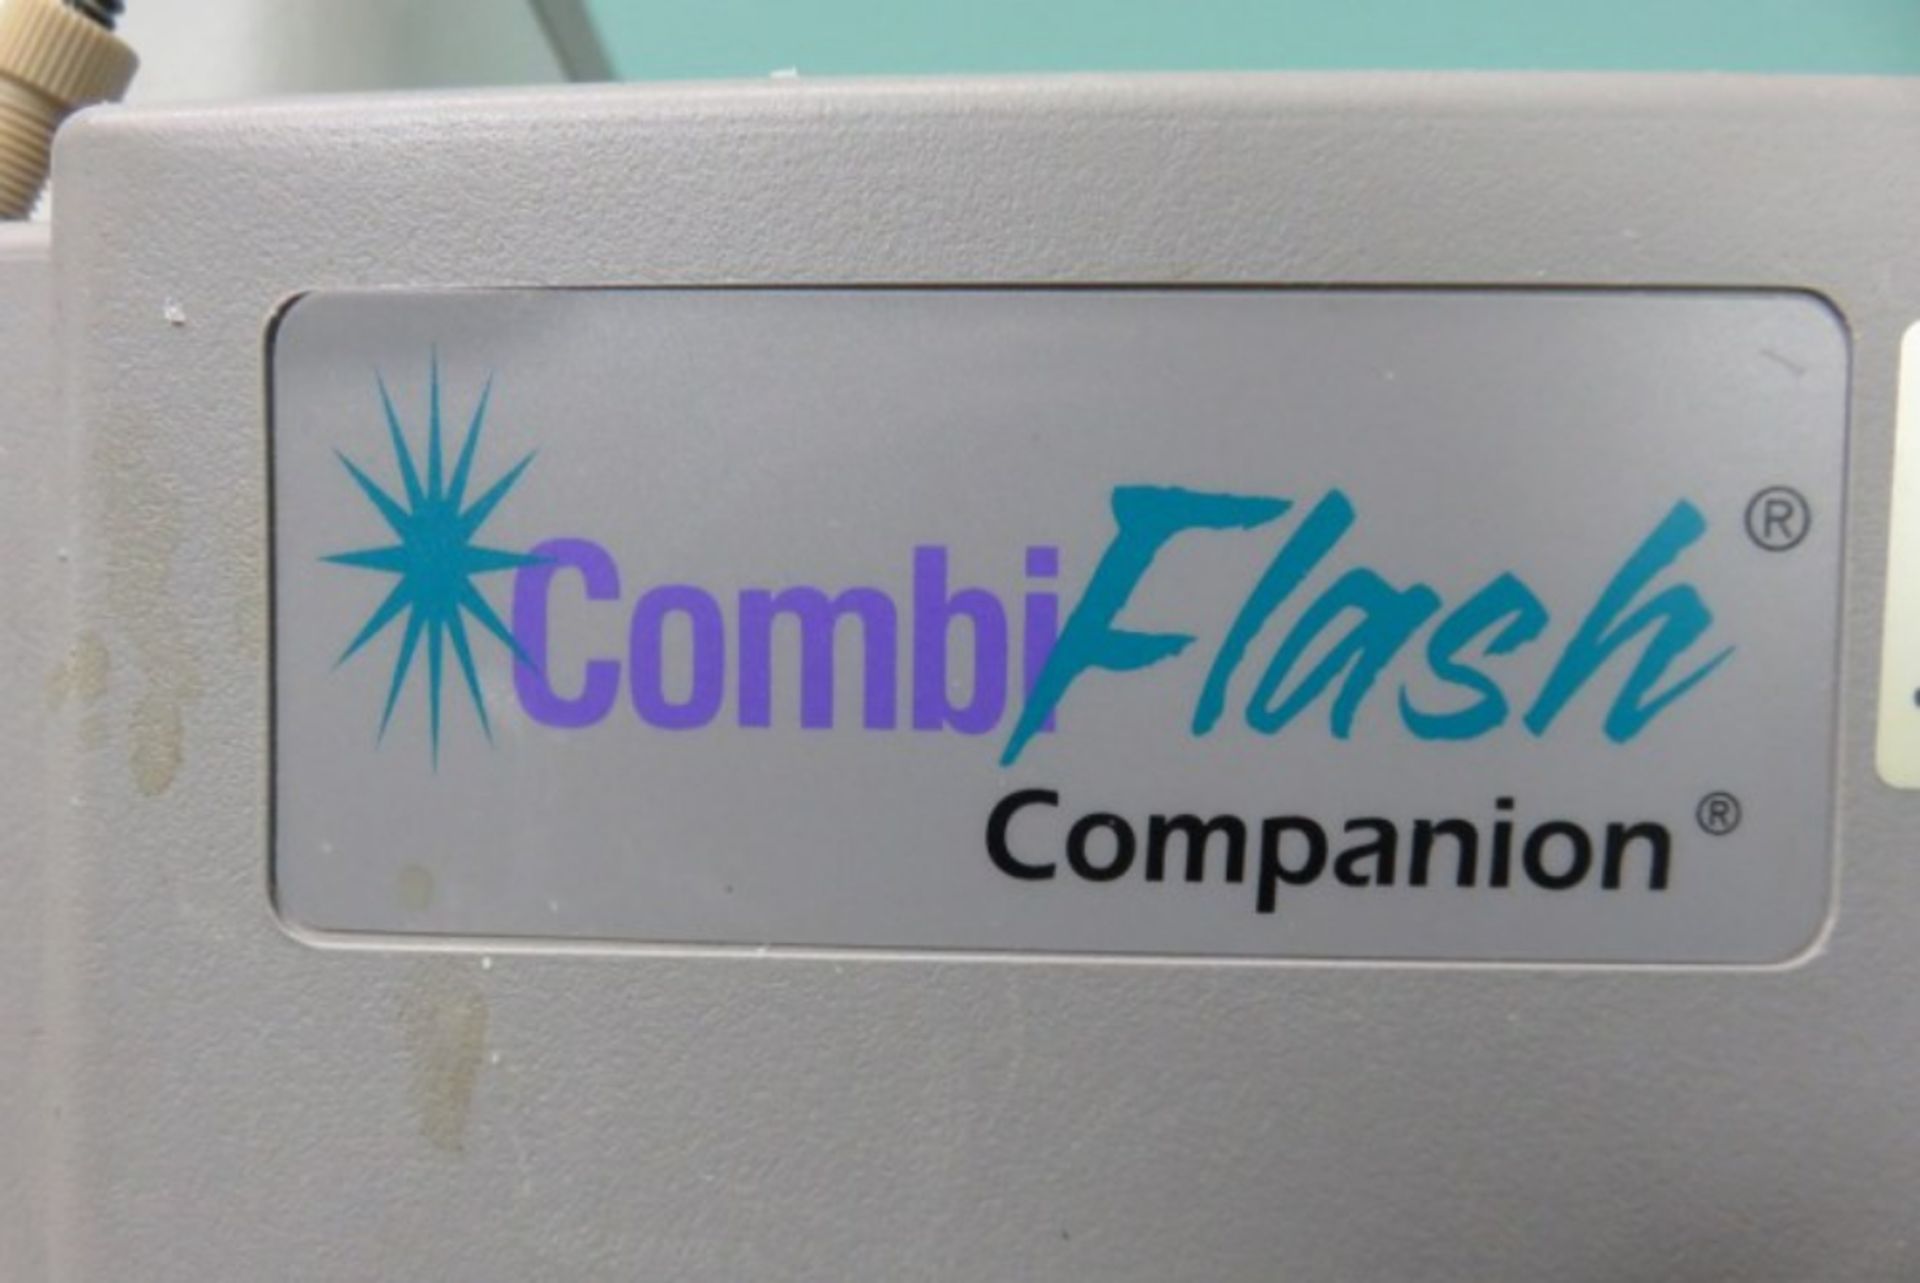 Combi Flash Companion - Image 5 of 5